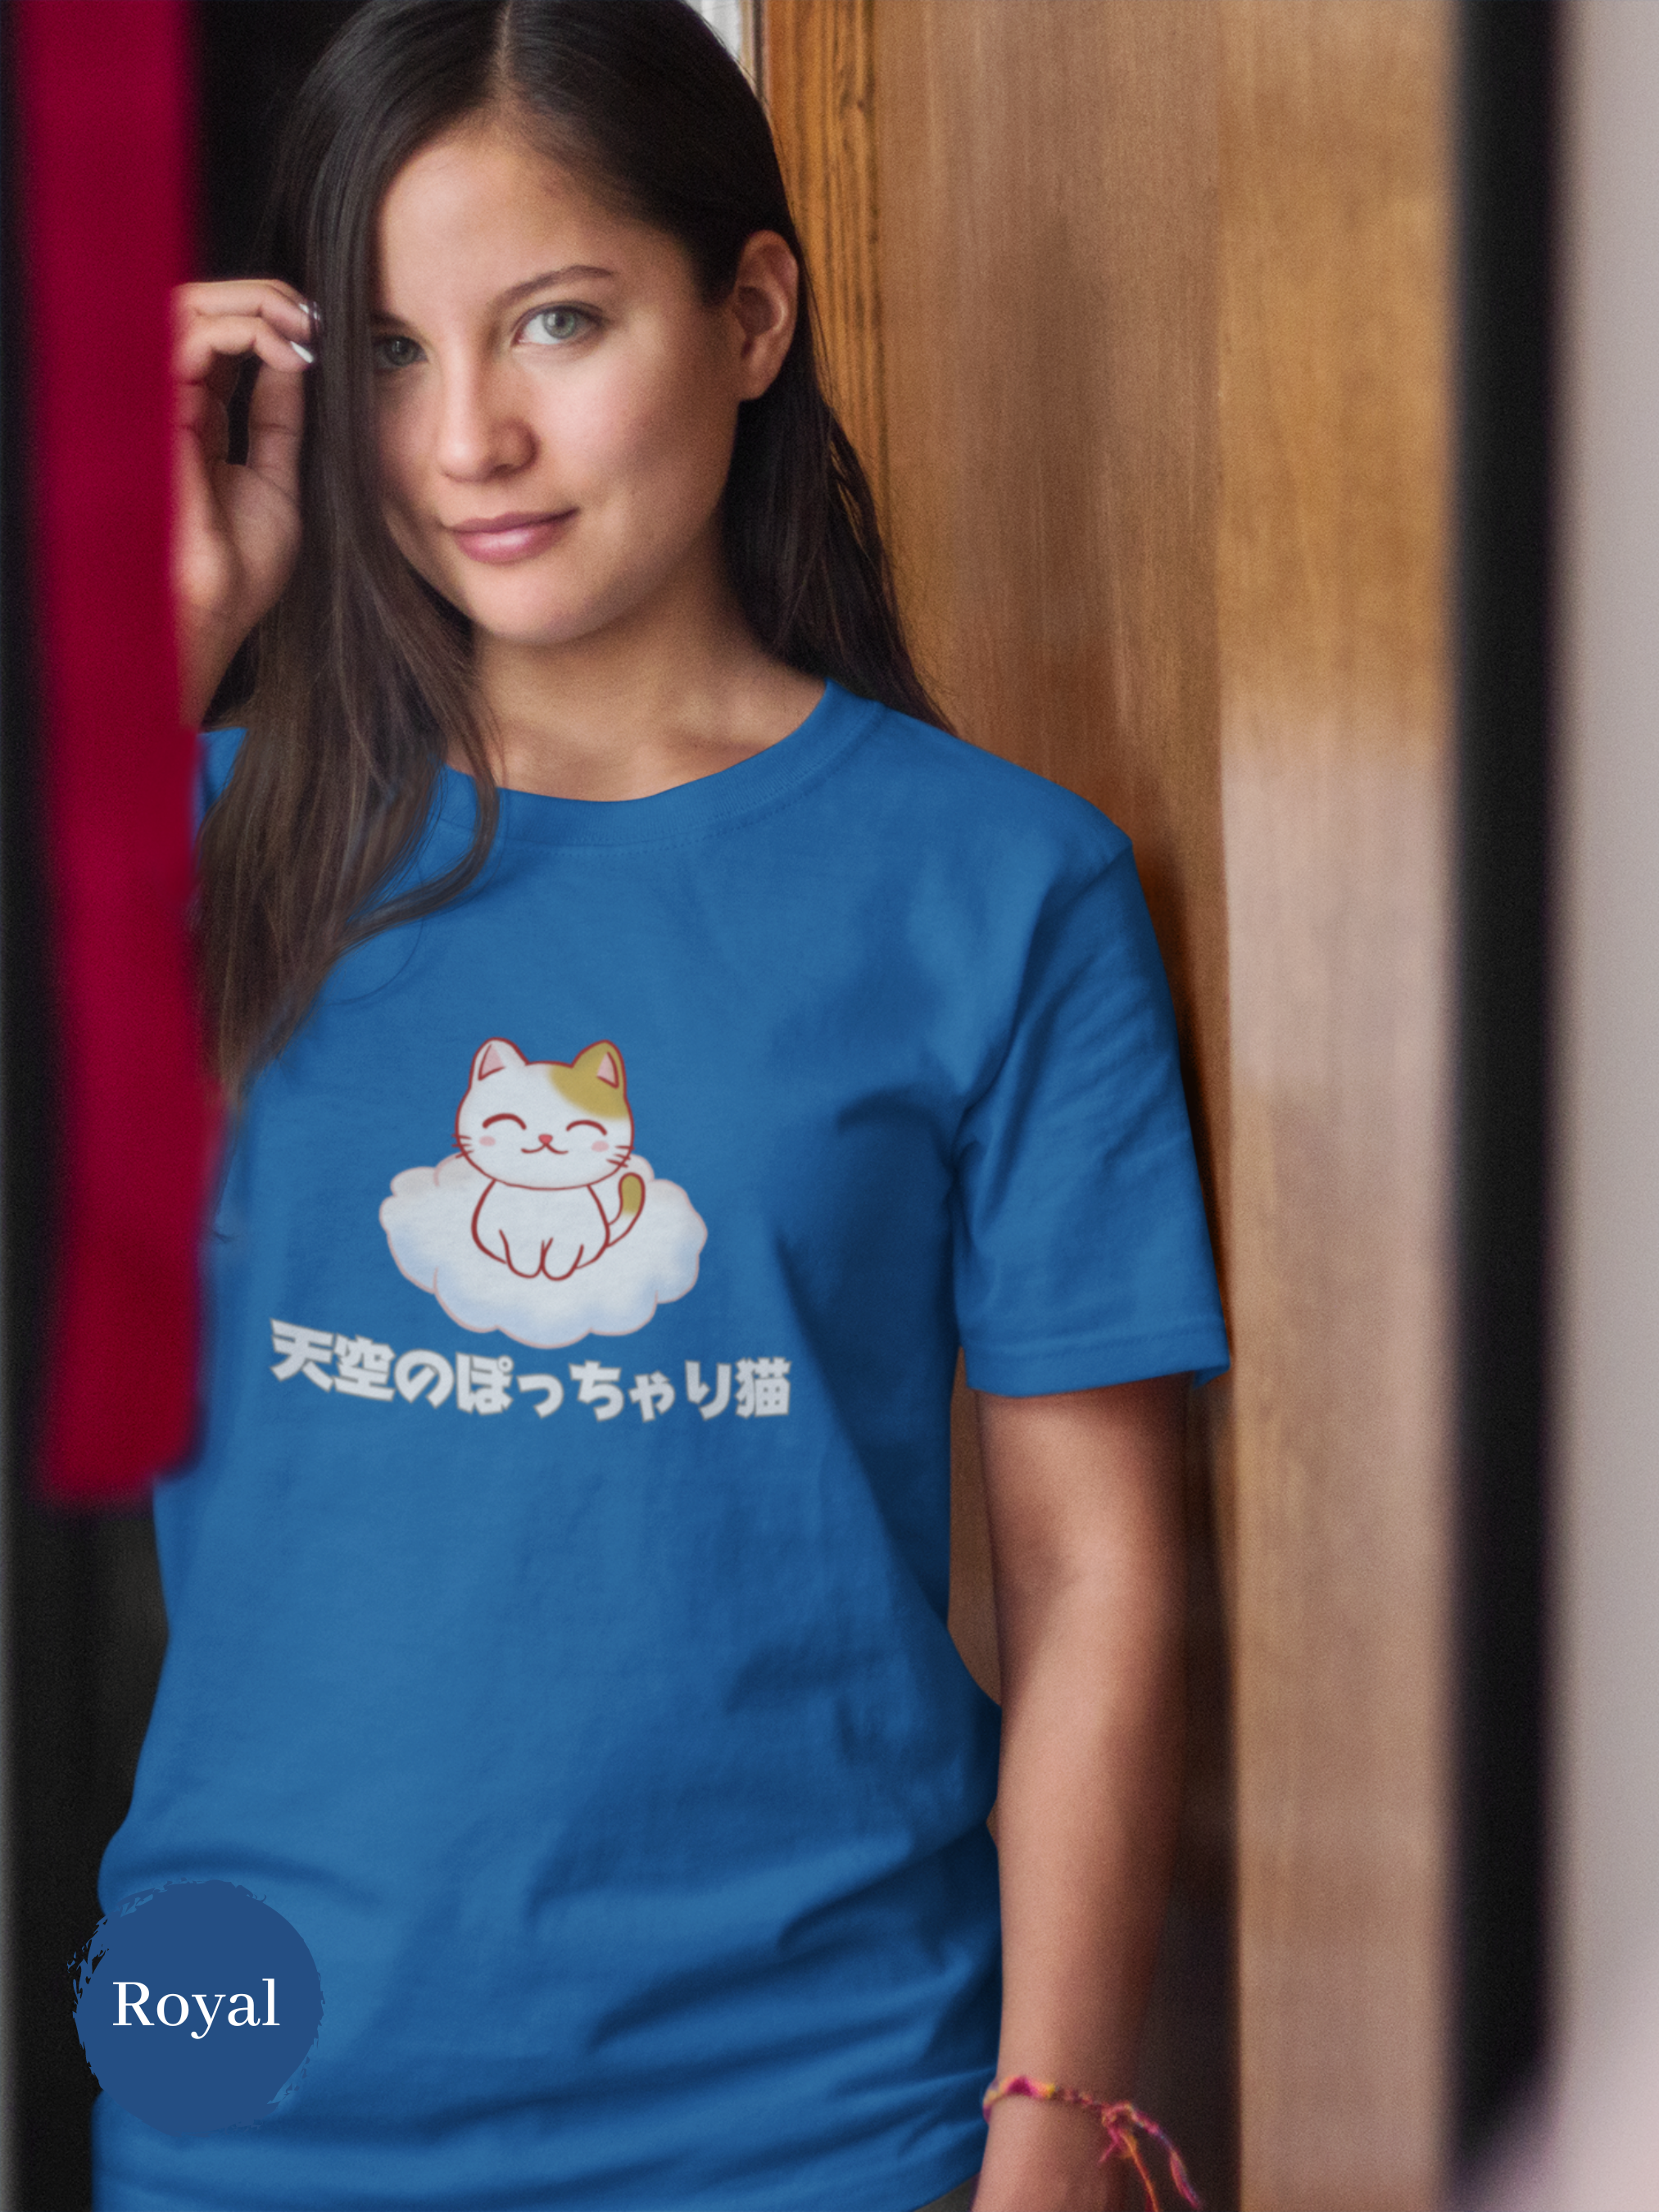 Cat T-Shirt: Heavenly Whiskers - Chubby Cat on Cloud Japanese Shirt - Unique Cat Art Design